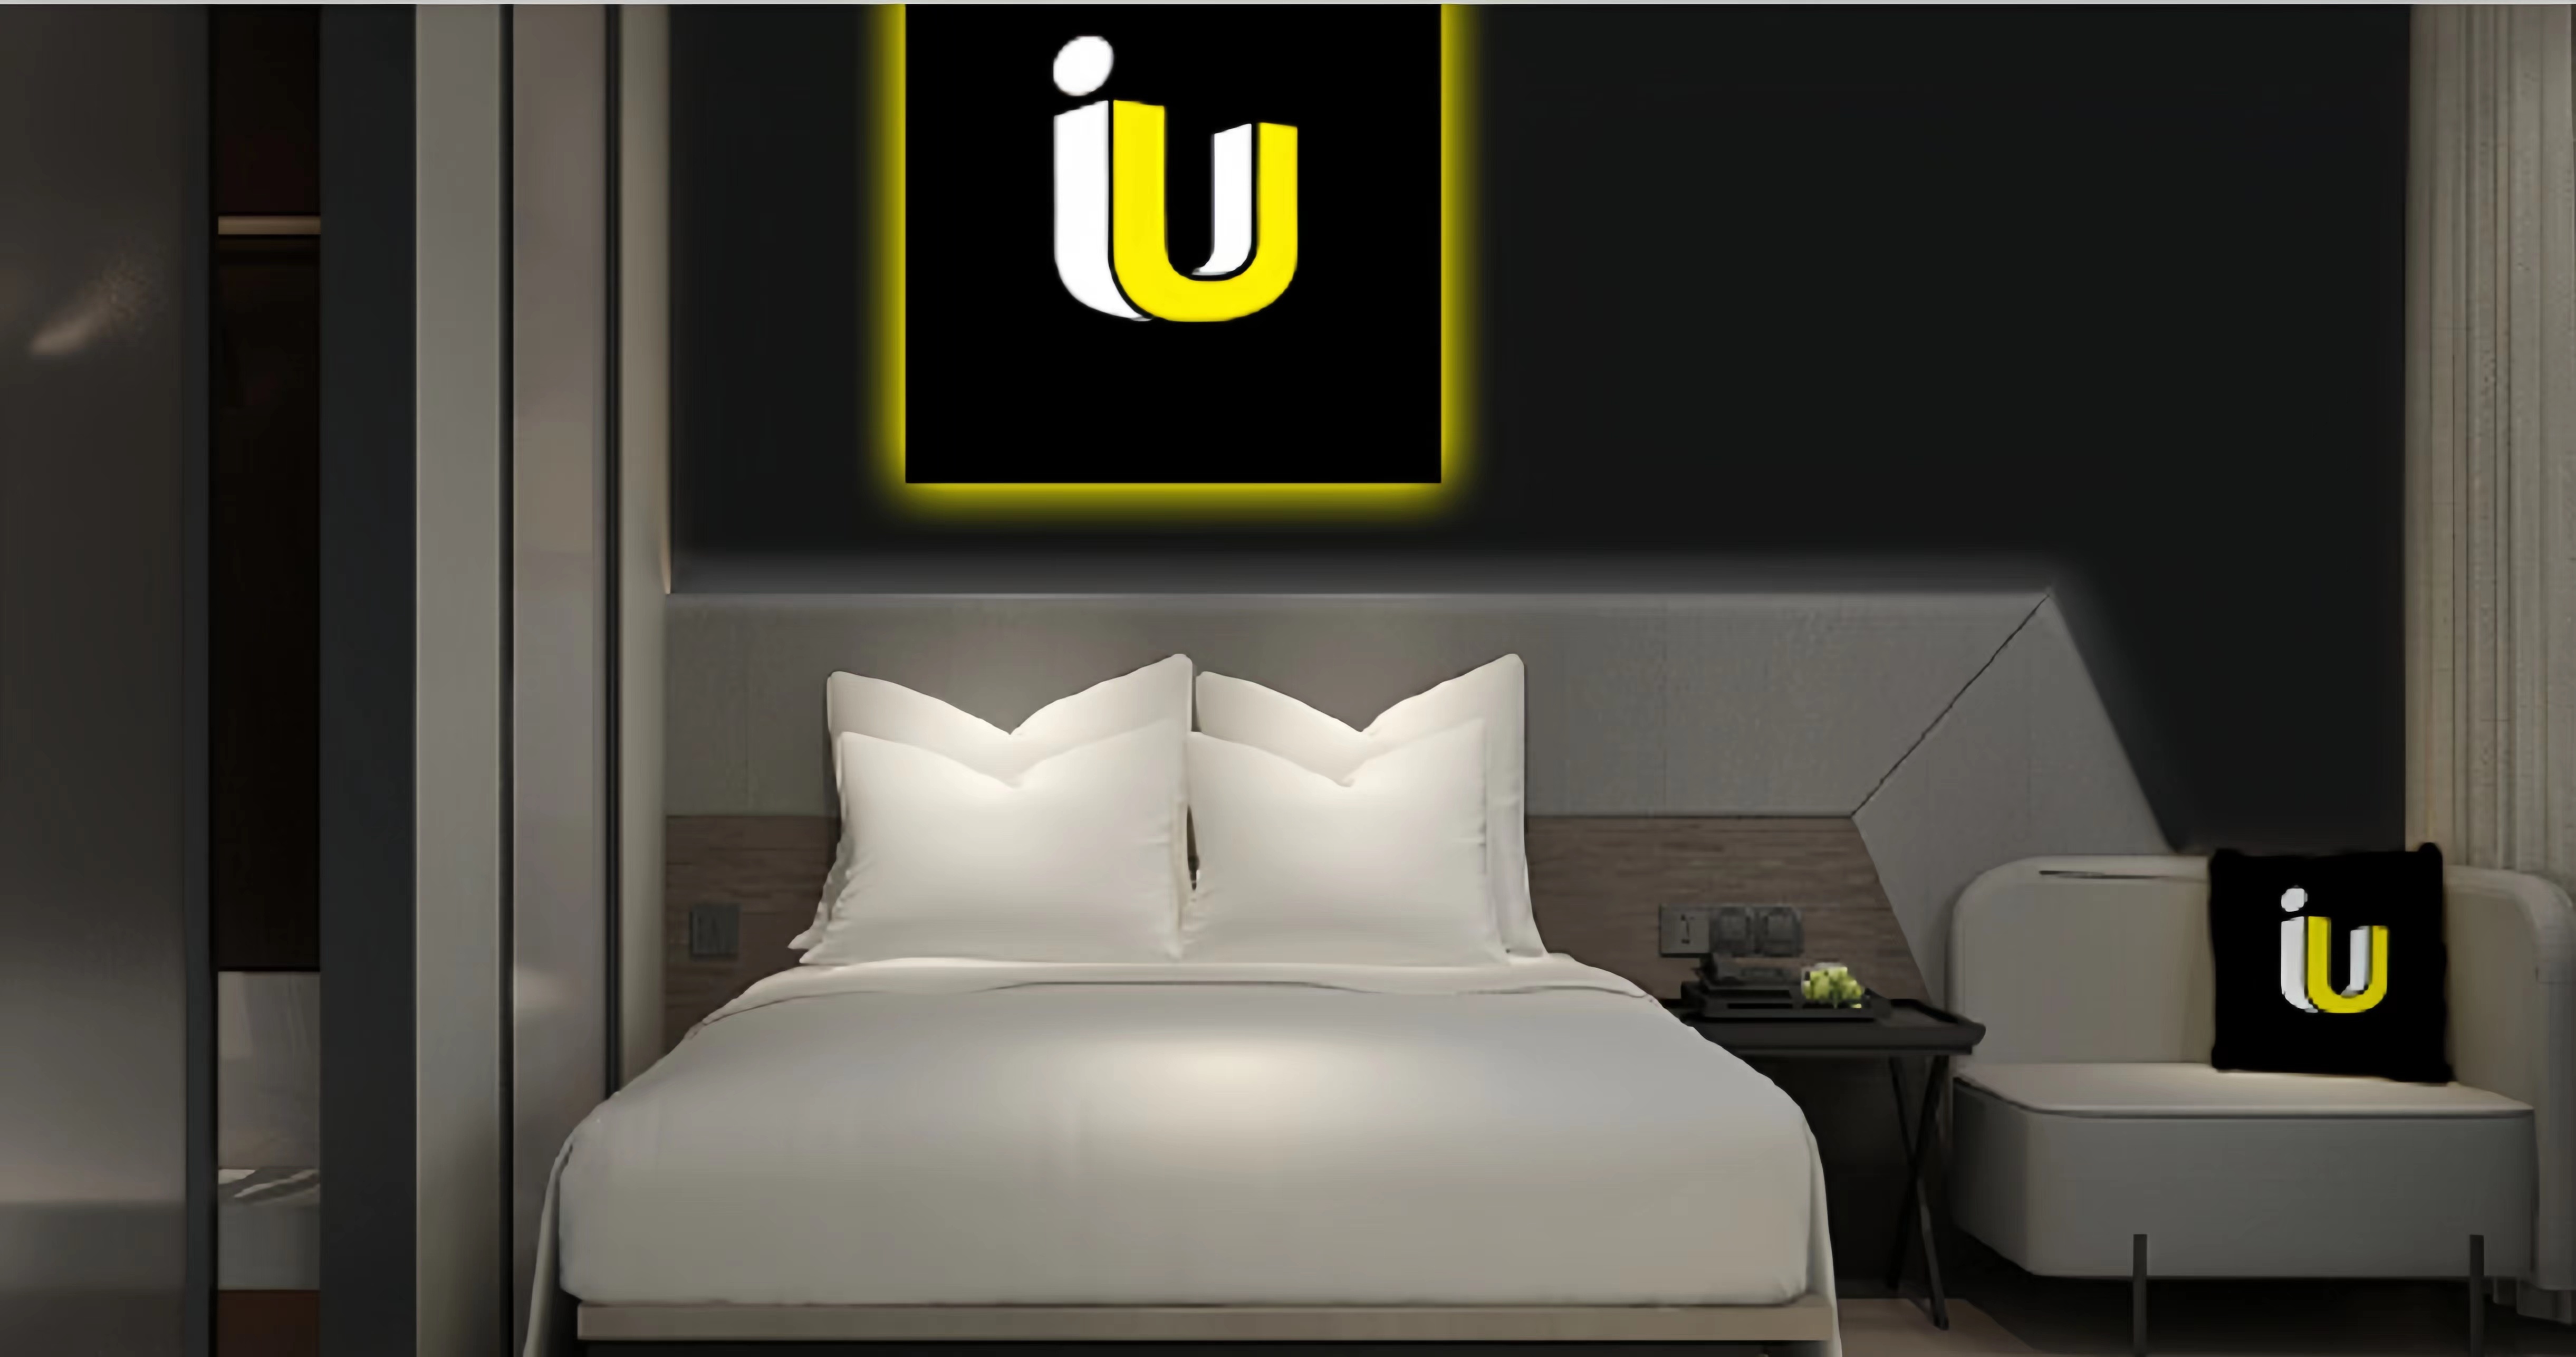 IU Hotel Brand Design and Identity Rejuvenation